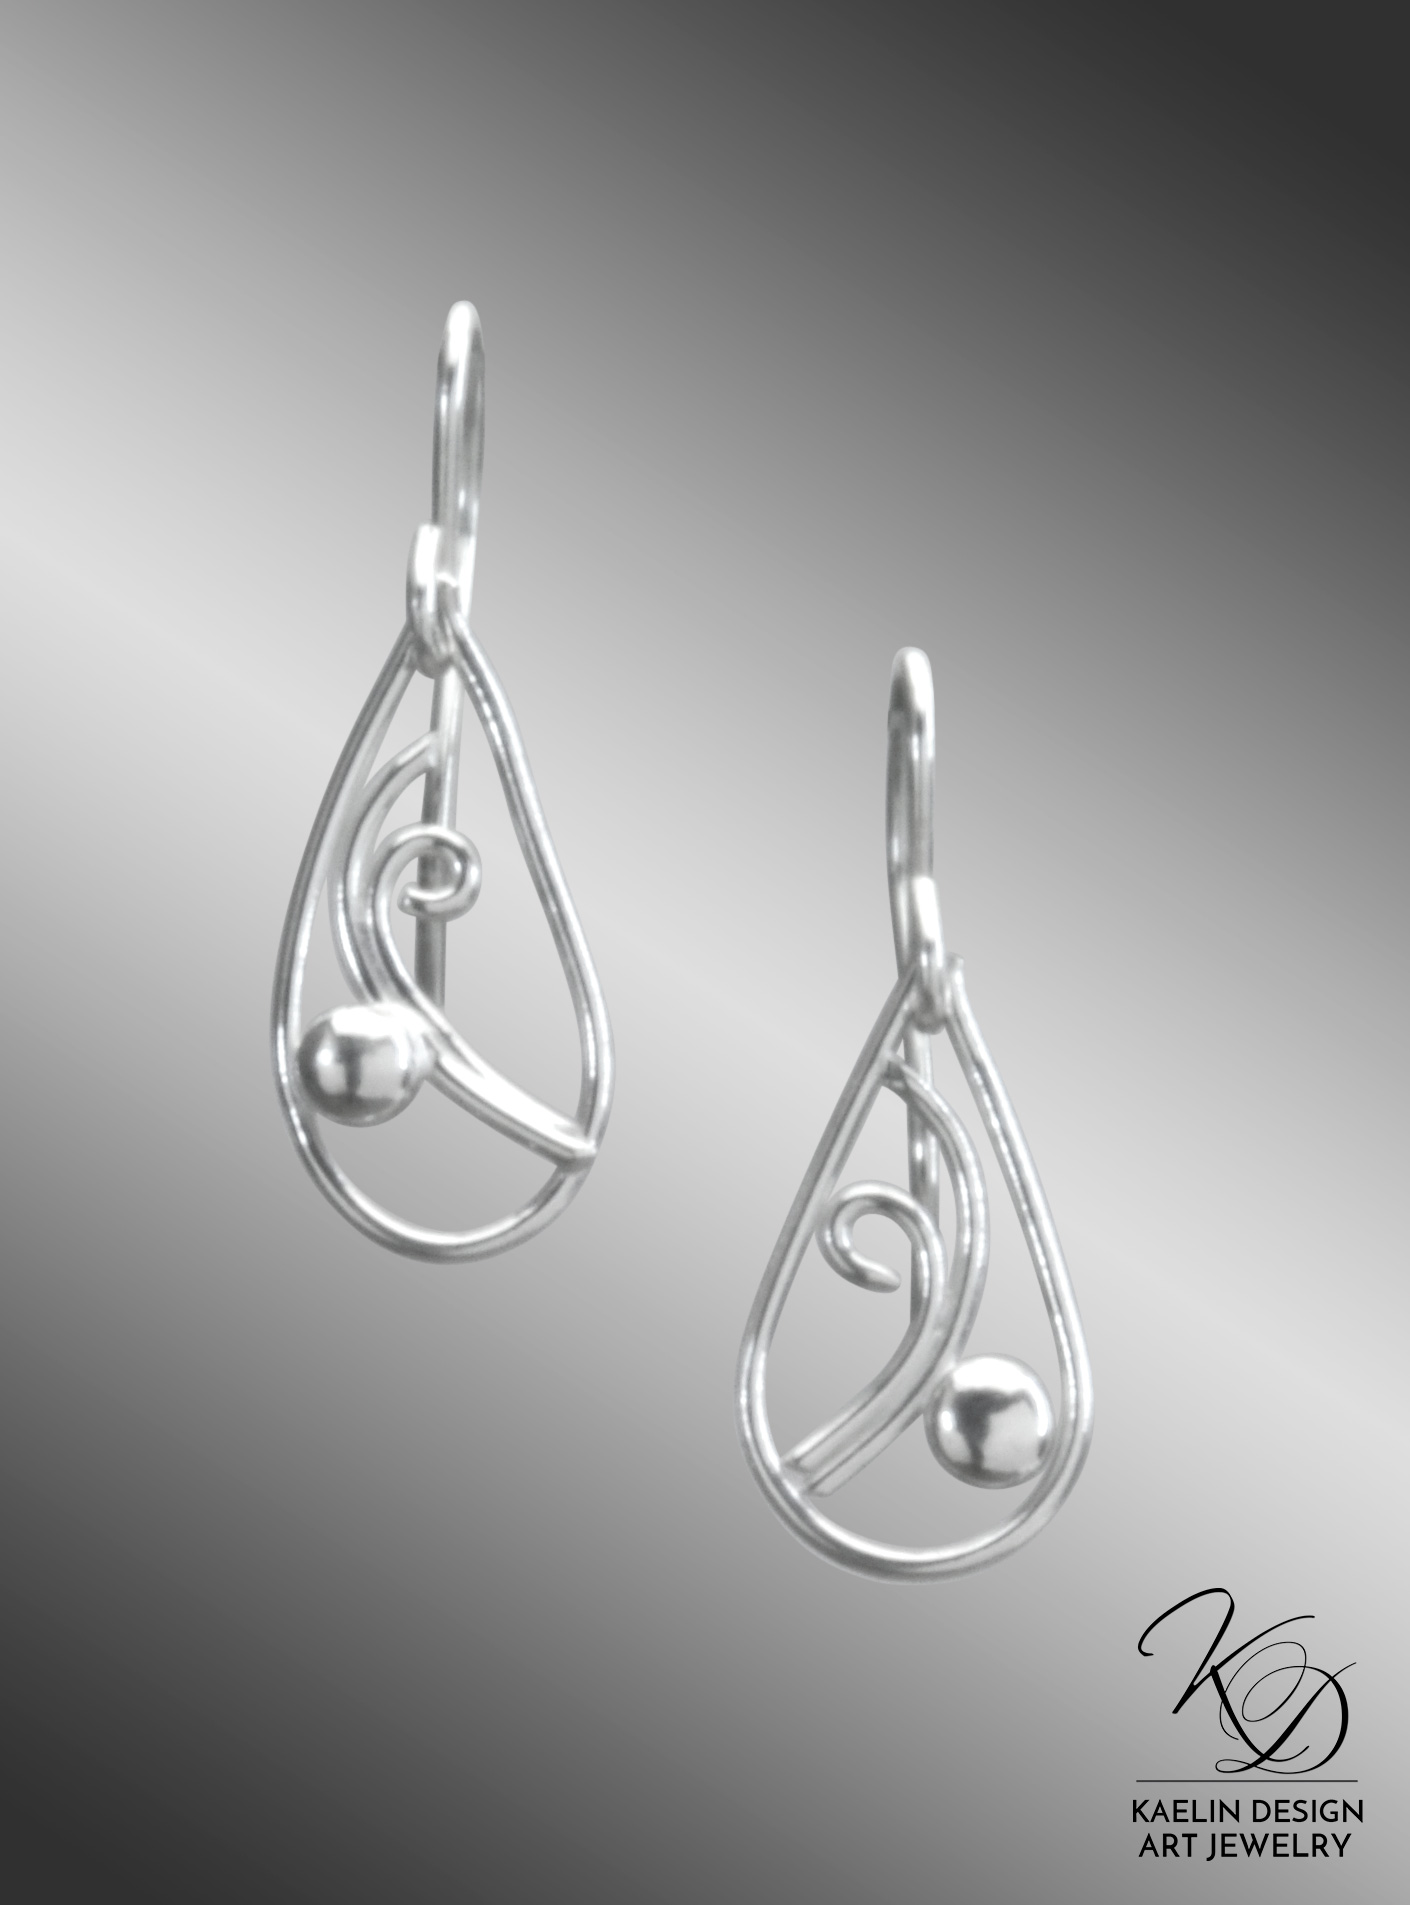 Laguna Hand Forged Sterling Silver Earrings by Kaelin Design Fine Art Jewelry